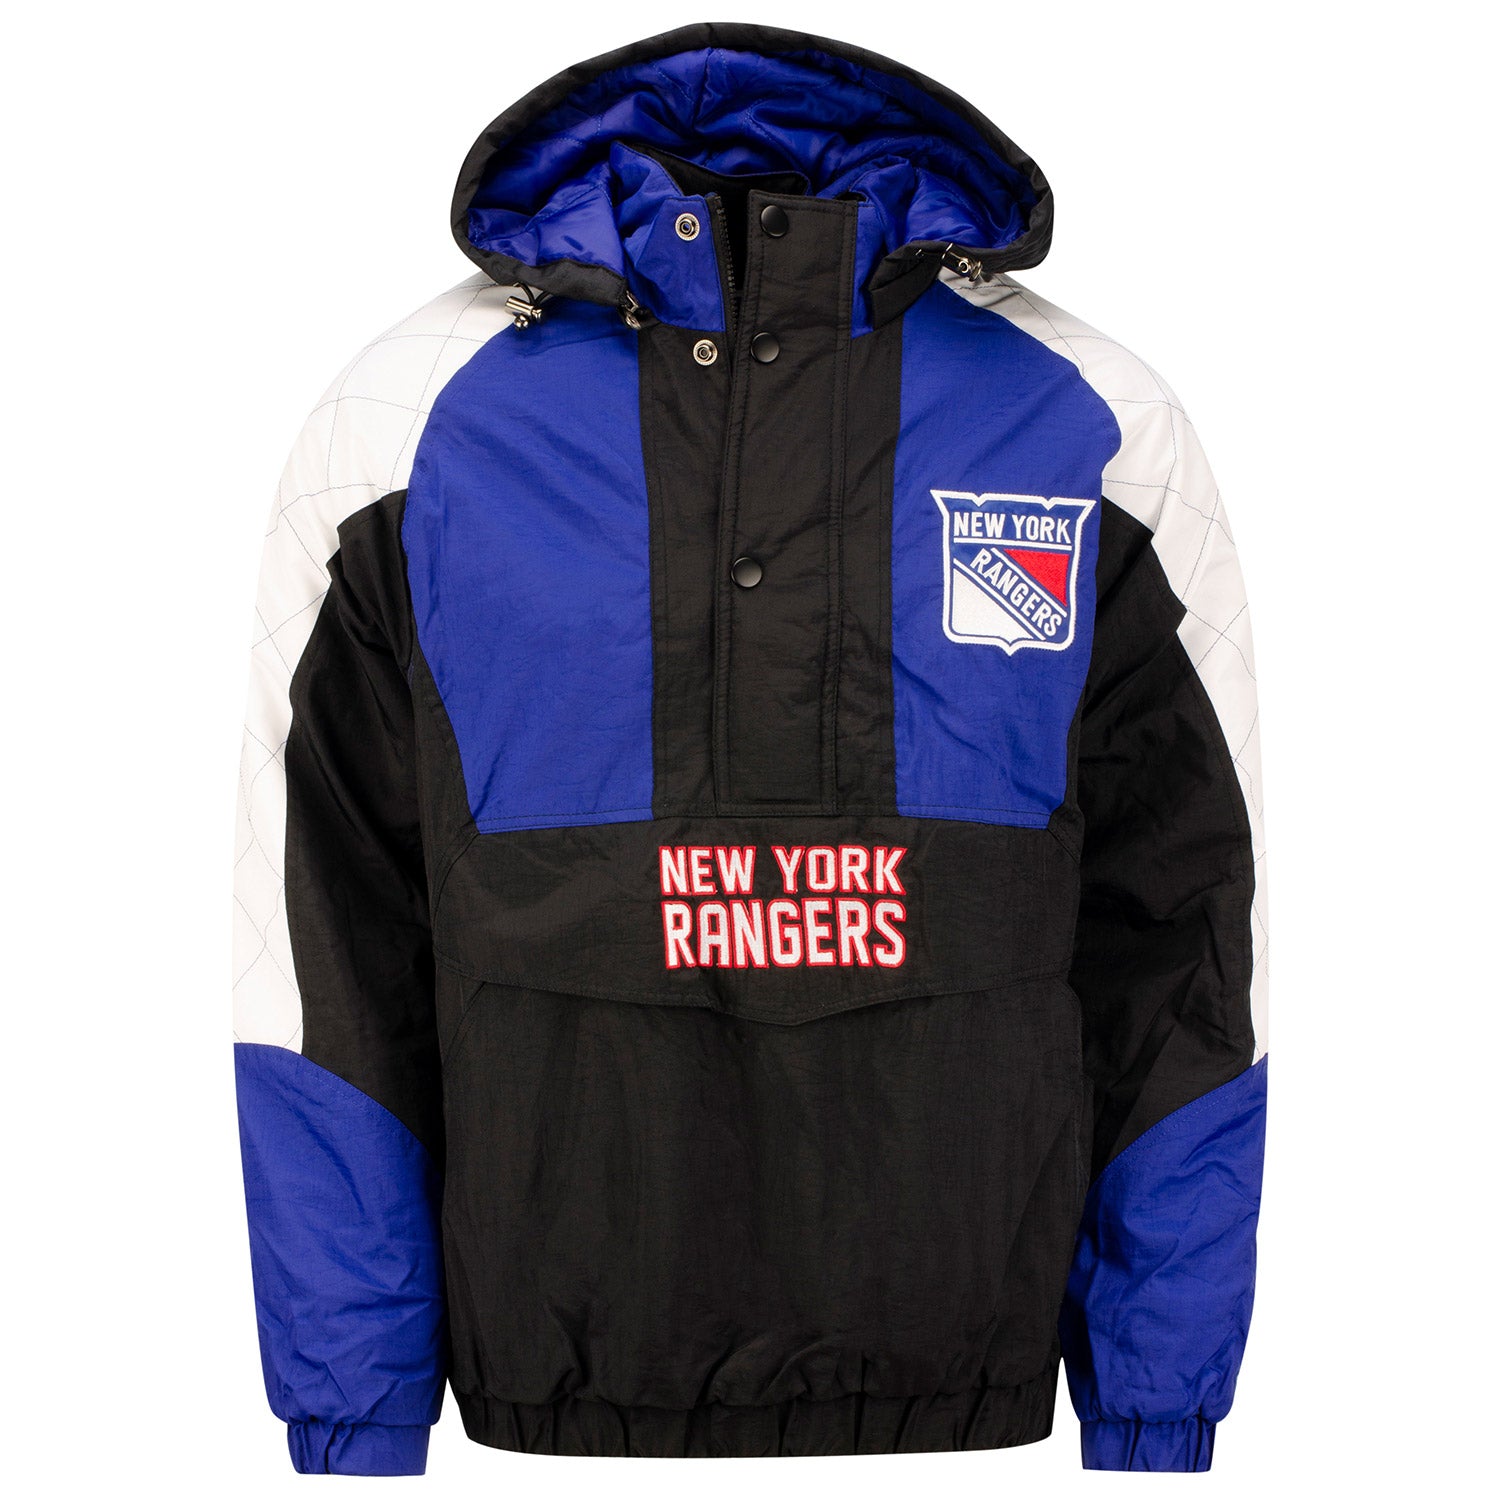 Personalized New York Rangers Toddler Crewneck Sweatshirt Black / 4T